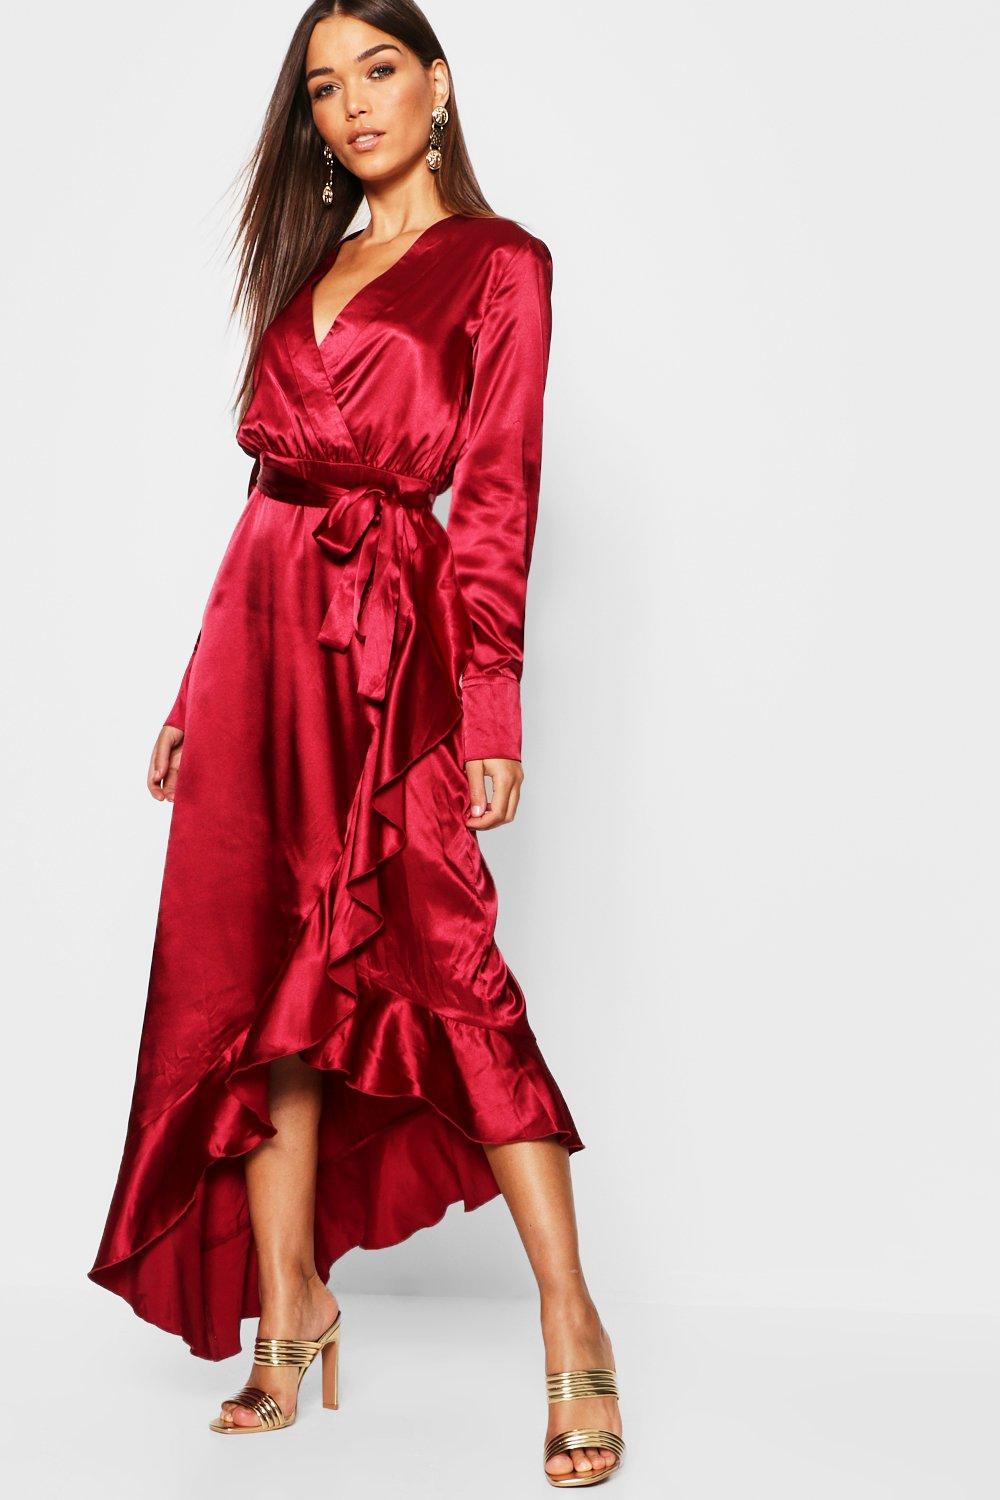 Burgundy Wrap Dress Maxi Hot Sale, UP ...